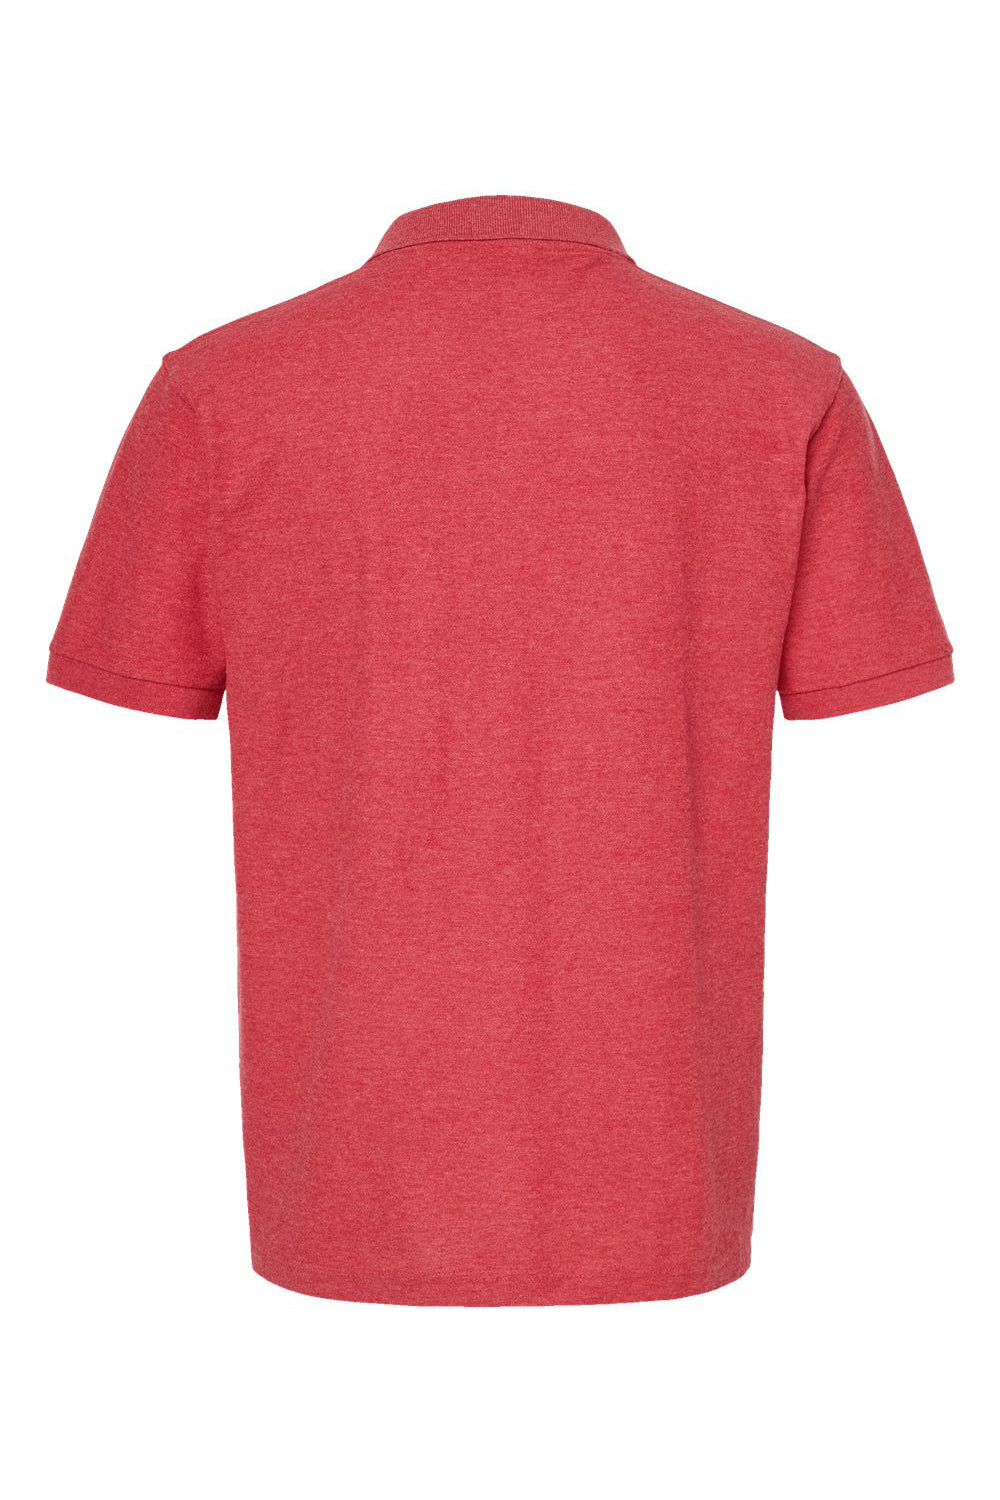 Tultex 400 Mens Sport Shirt Sleeve Polo Shirt Heather Red Flat Back